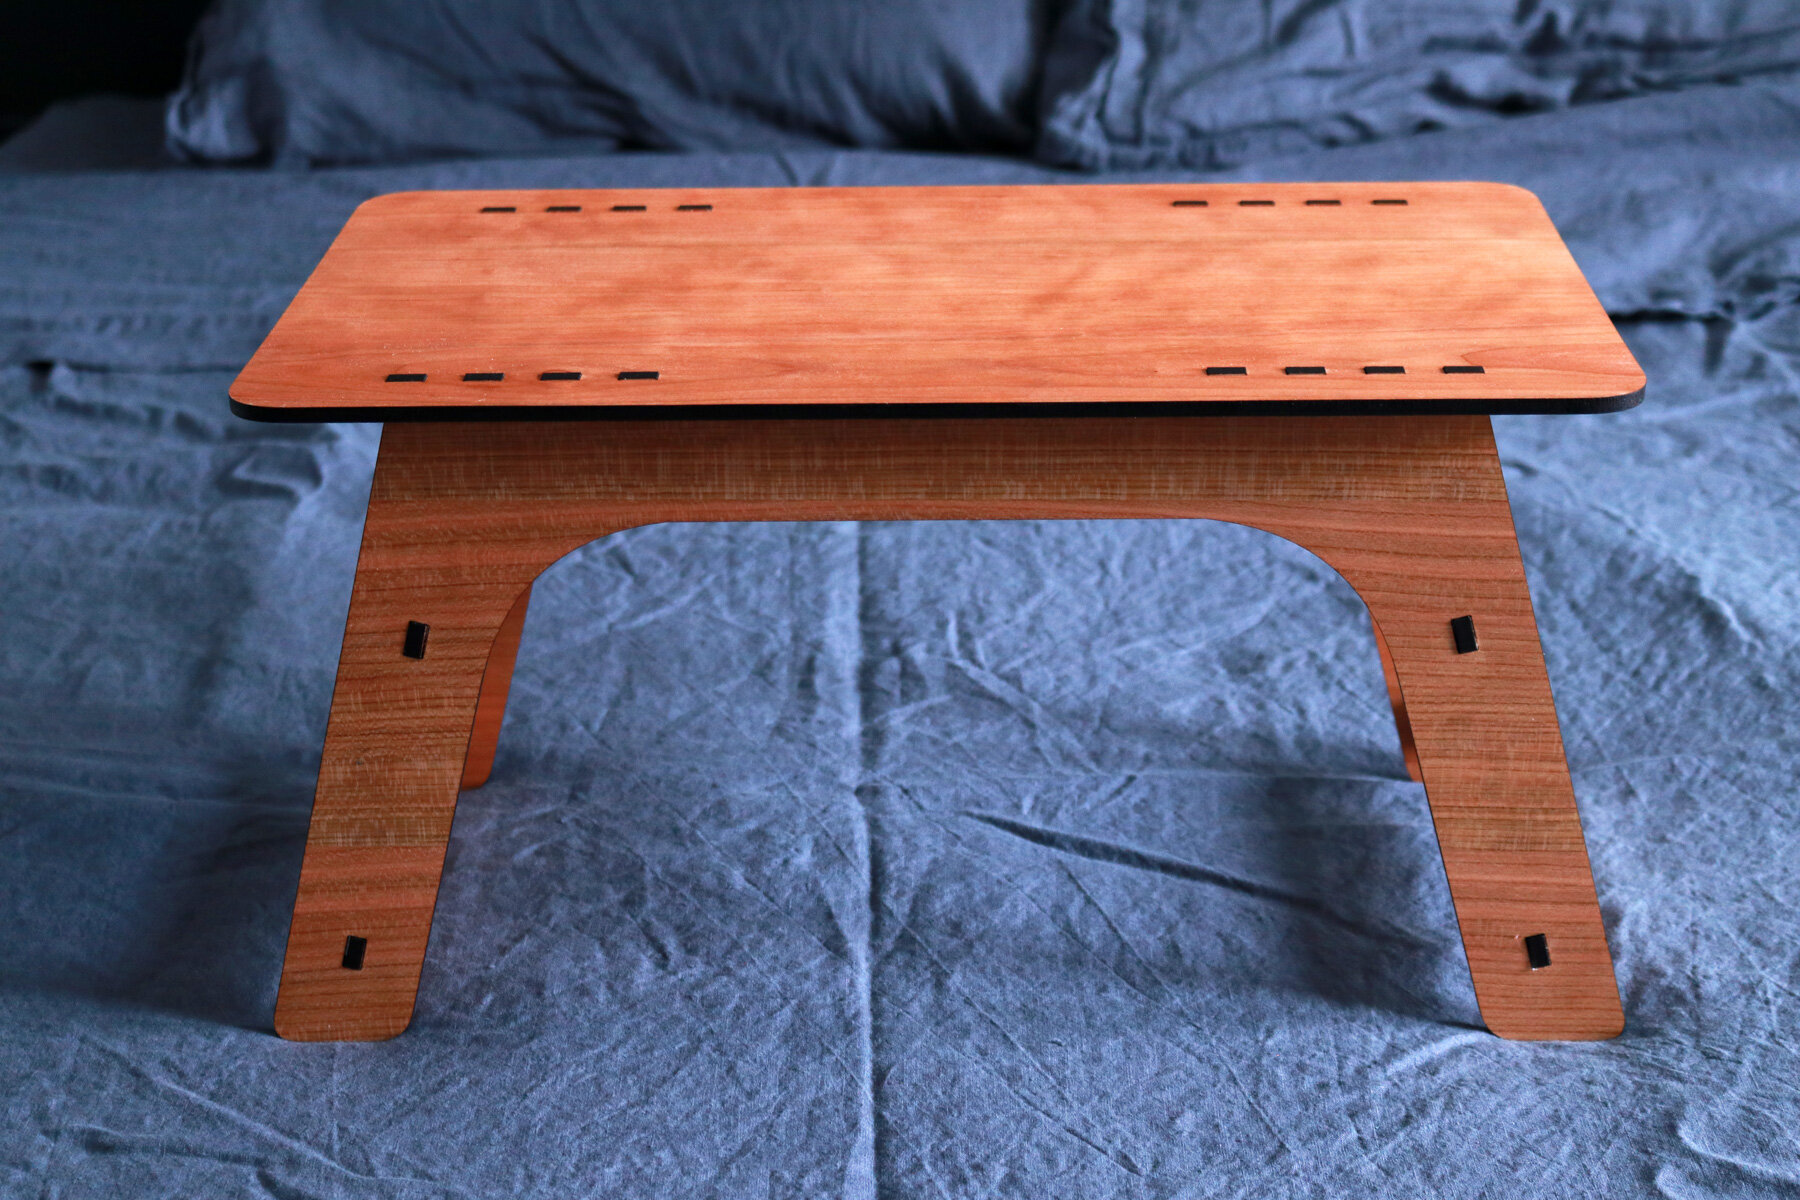 041_Minimal-Personal-Wood-Table.jpg